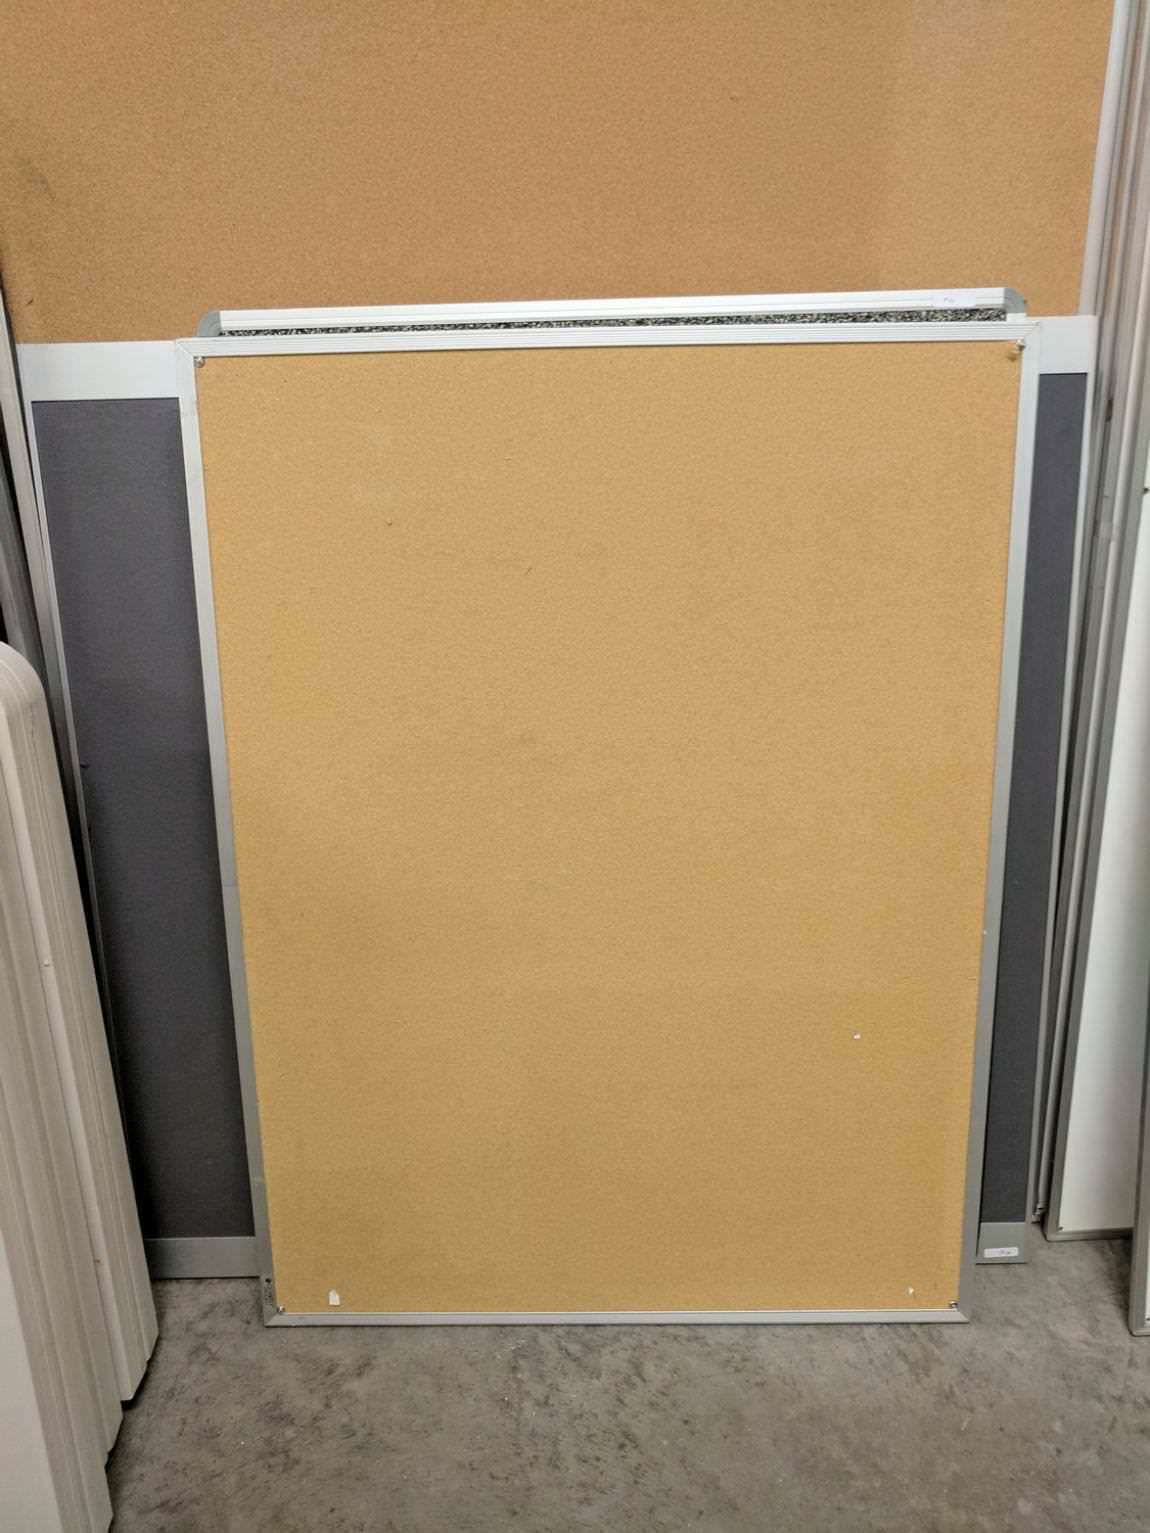 48x36 Bulletin Board With Aluminum Frame